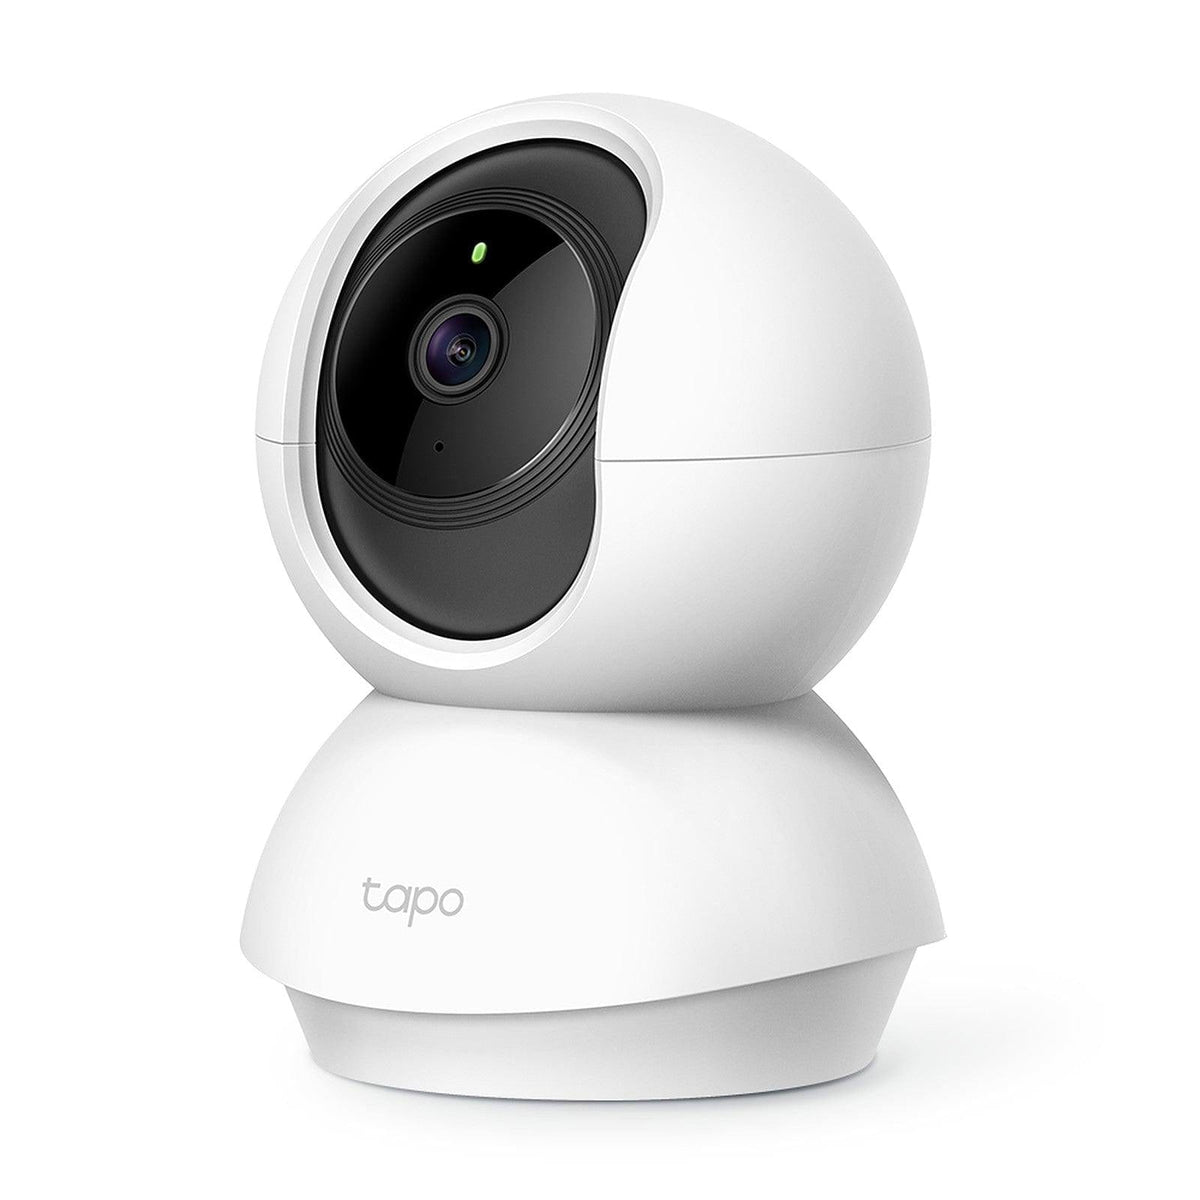 Tp-Link Tapo C200 maroc Prix Camera de surveillance pas cher - smartmarket.ma